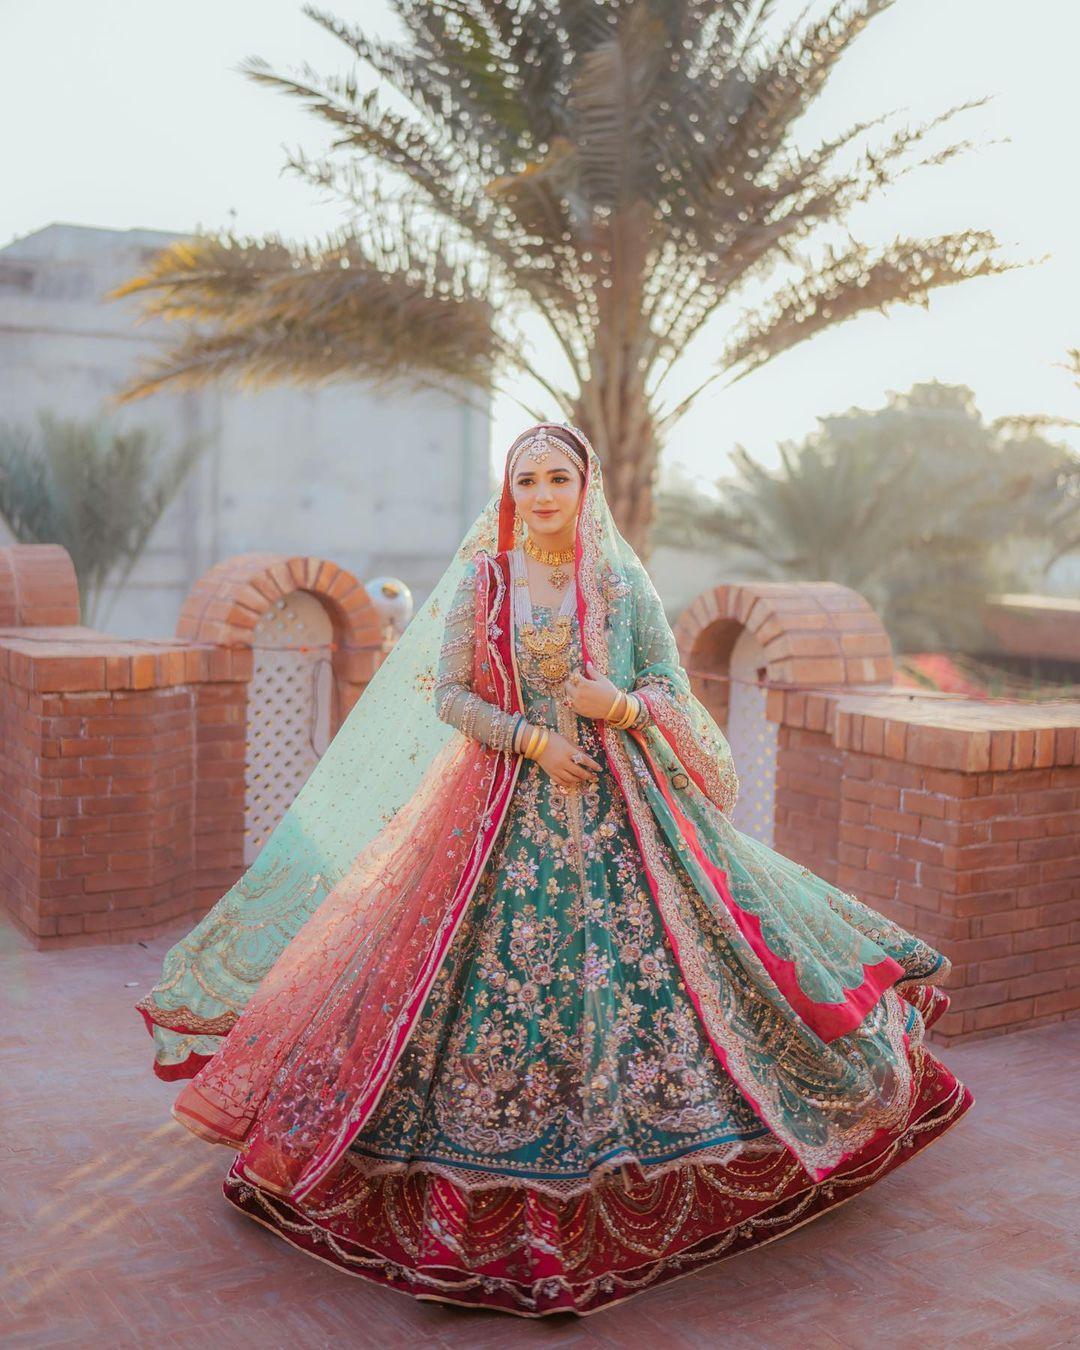 Krishna Fancy Dresses in Begum Pur,Delhi - Best Costumes On Rent in Delhi -  Justdial